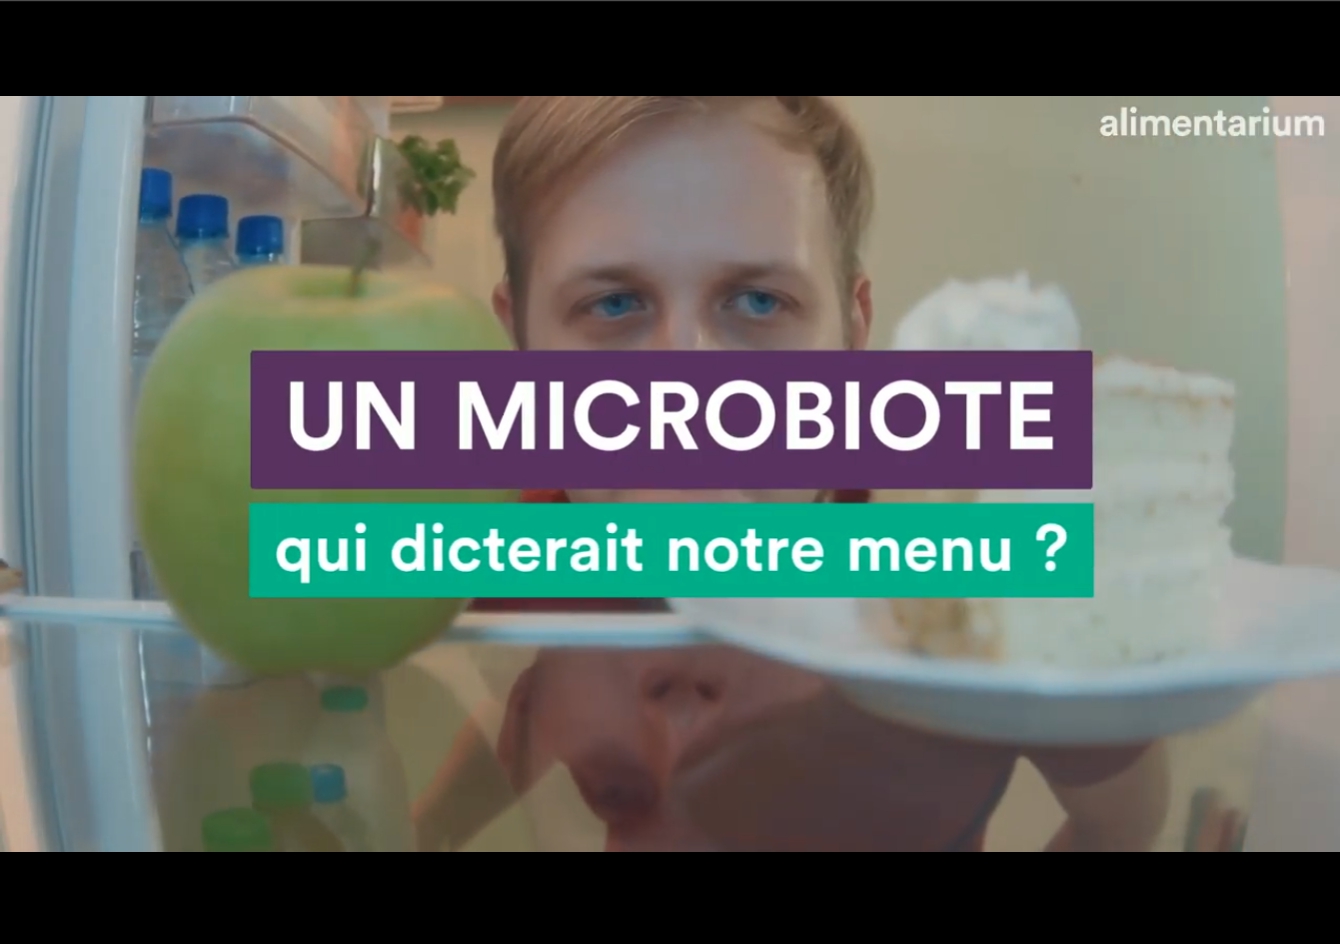 Un microbiote qui dicterait notre menu ?